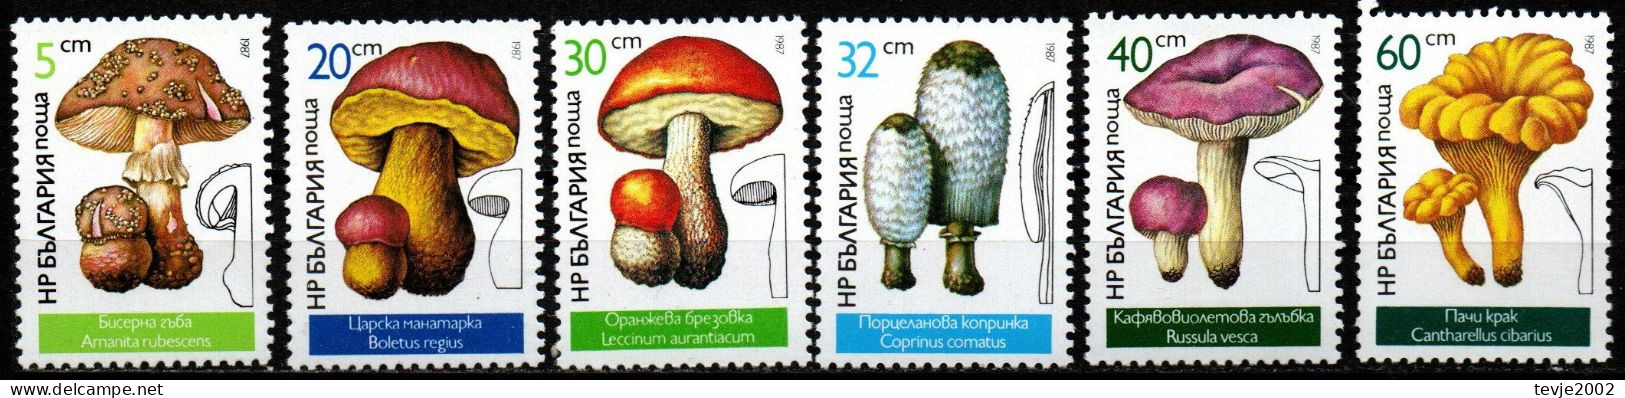 Bulgarien 1987 - Mi.Nr. 3546 - 3551 - Postfrisch MNH - Pilze Mushrooms - Mushrooms